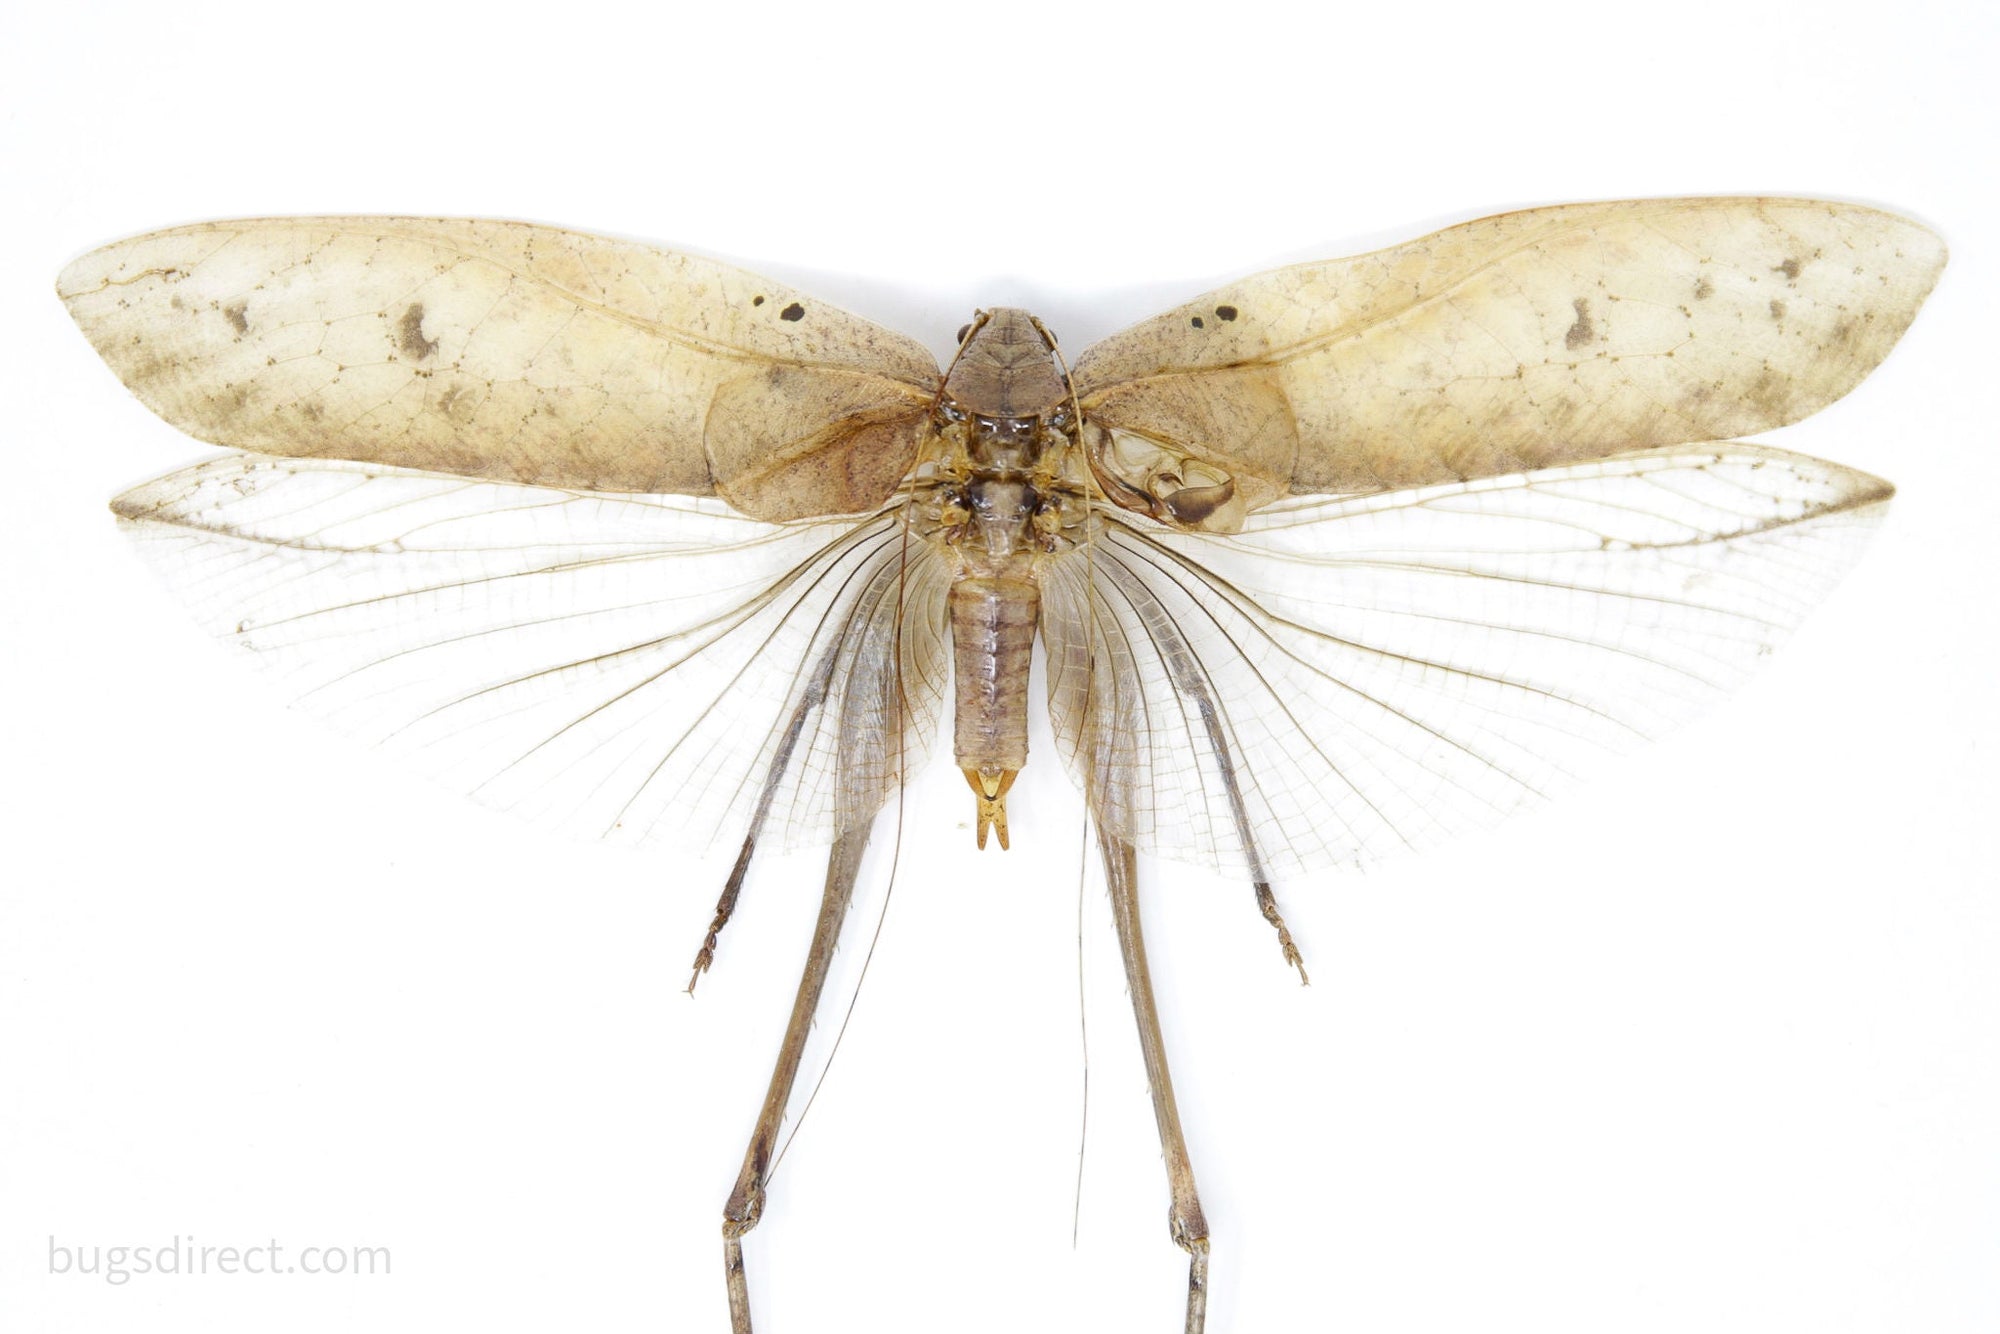 Thai Bush Katydids 5" Wingspan, Grasshopper, Cricket, Spread Specimens A1 Quality Real Insect Entomology